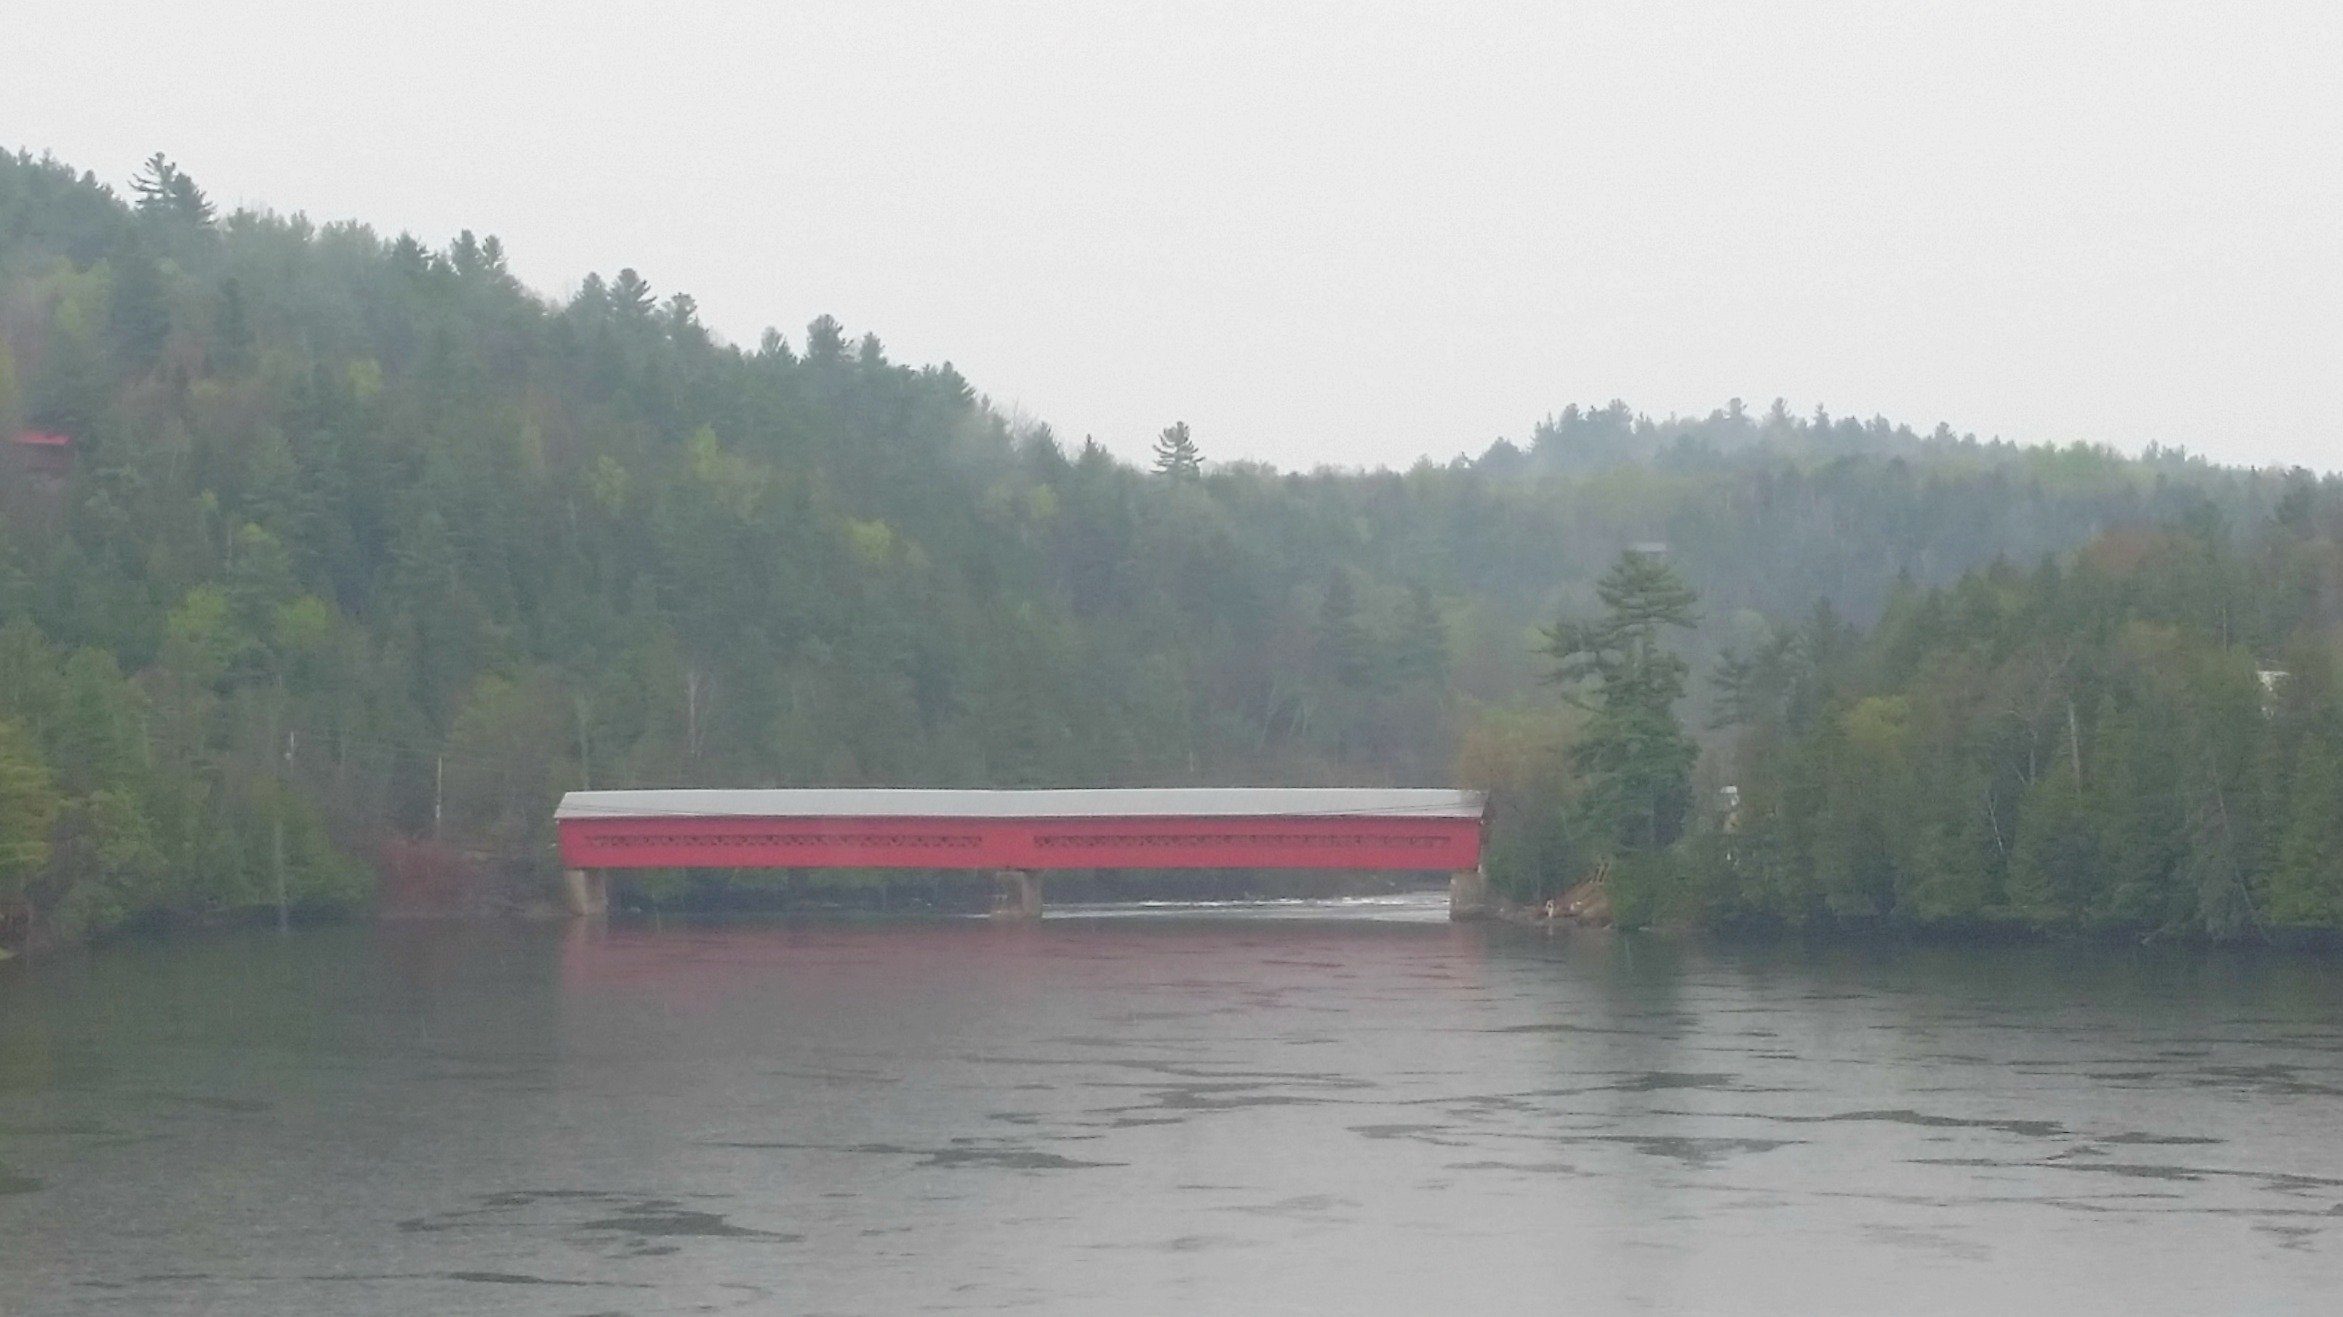 Wakefield Covered Bridge in the rain, near Ottawa Canada